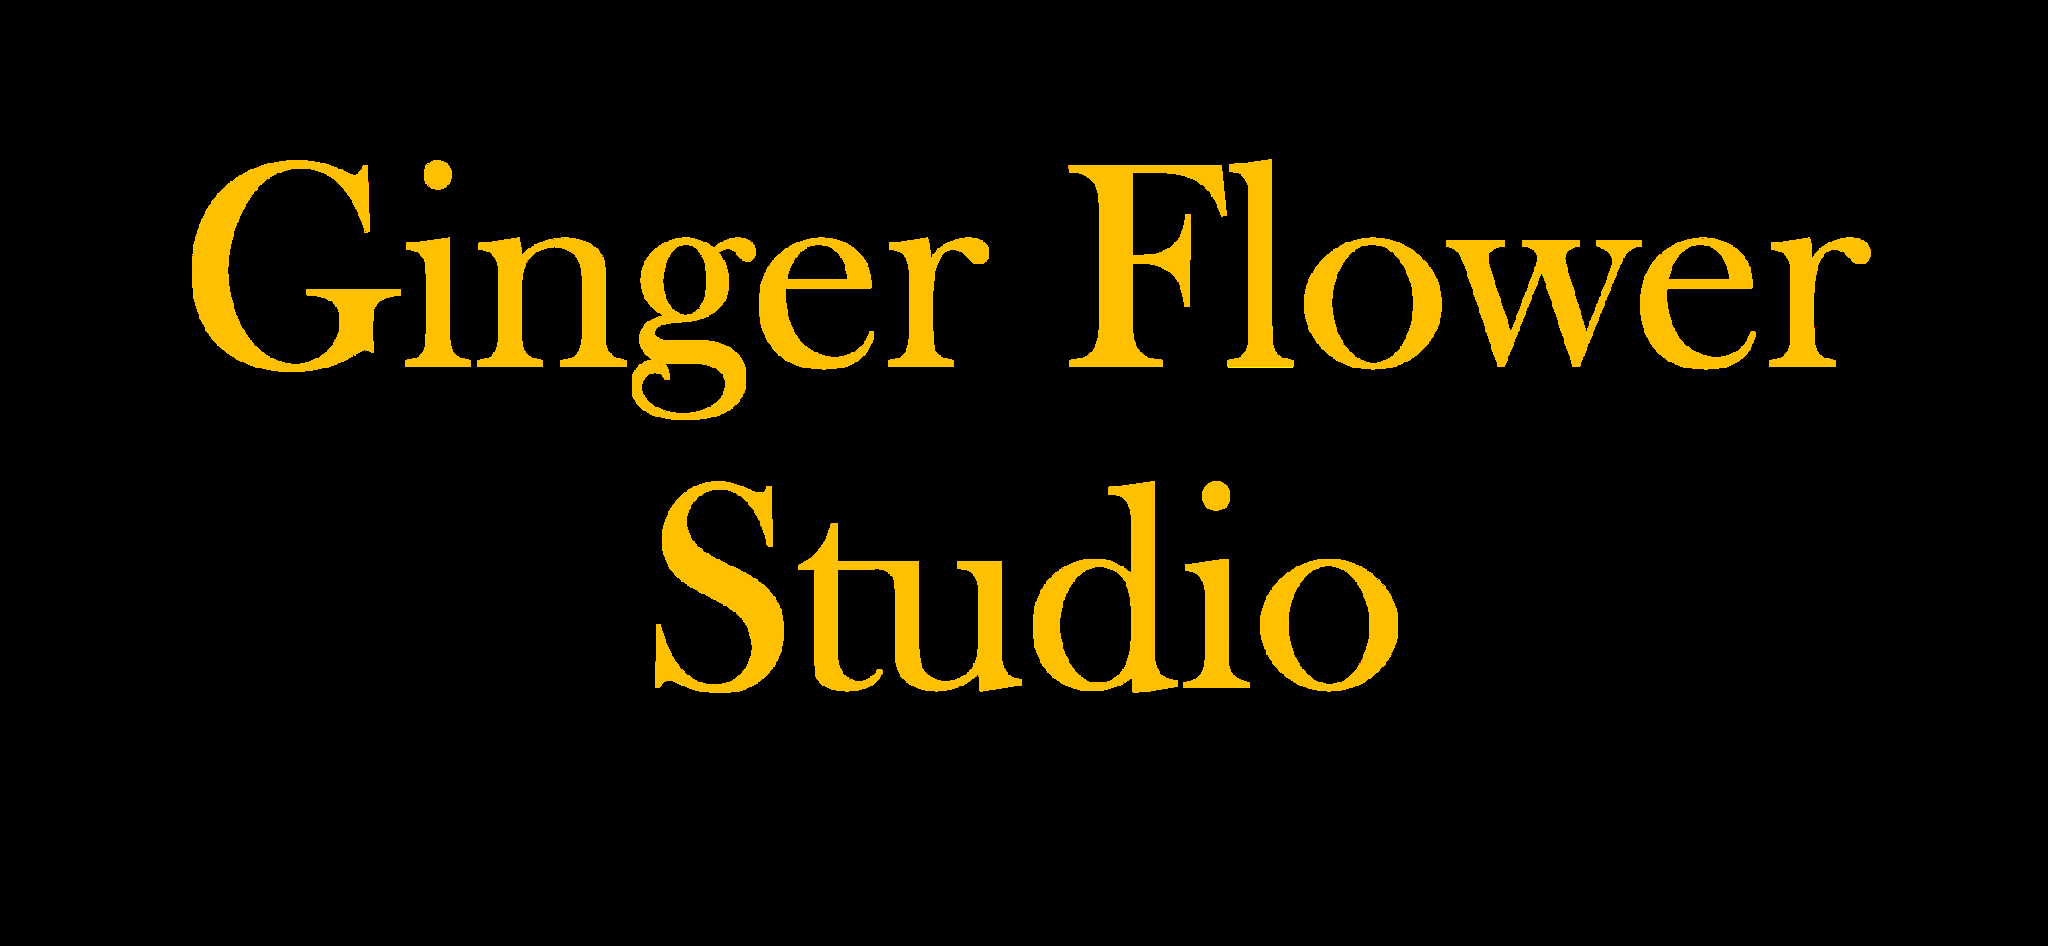 Ginger Flower Studio - Fleuristes et magasins de fleurs